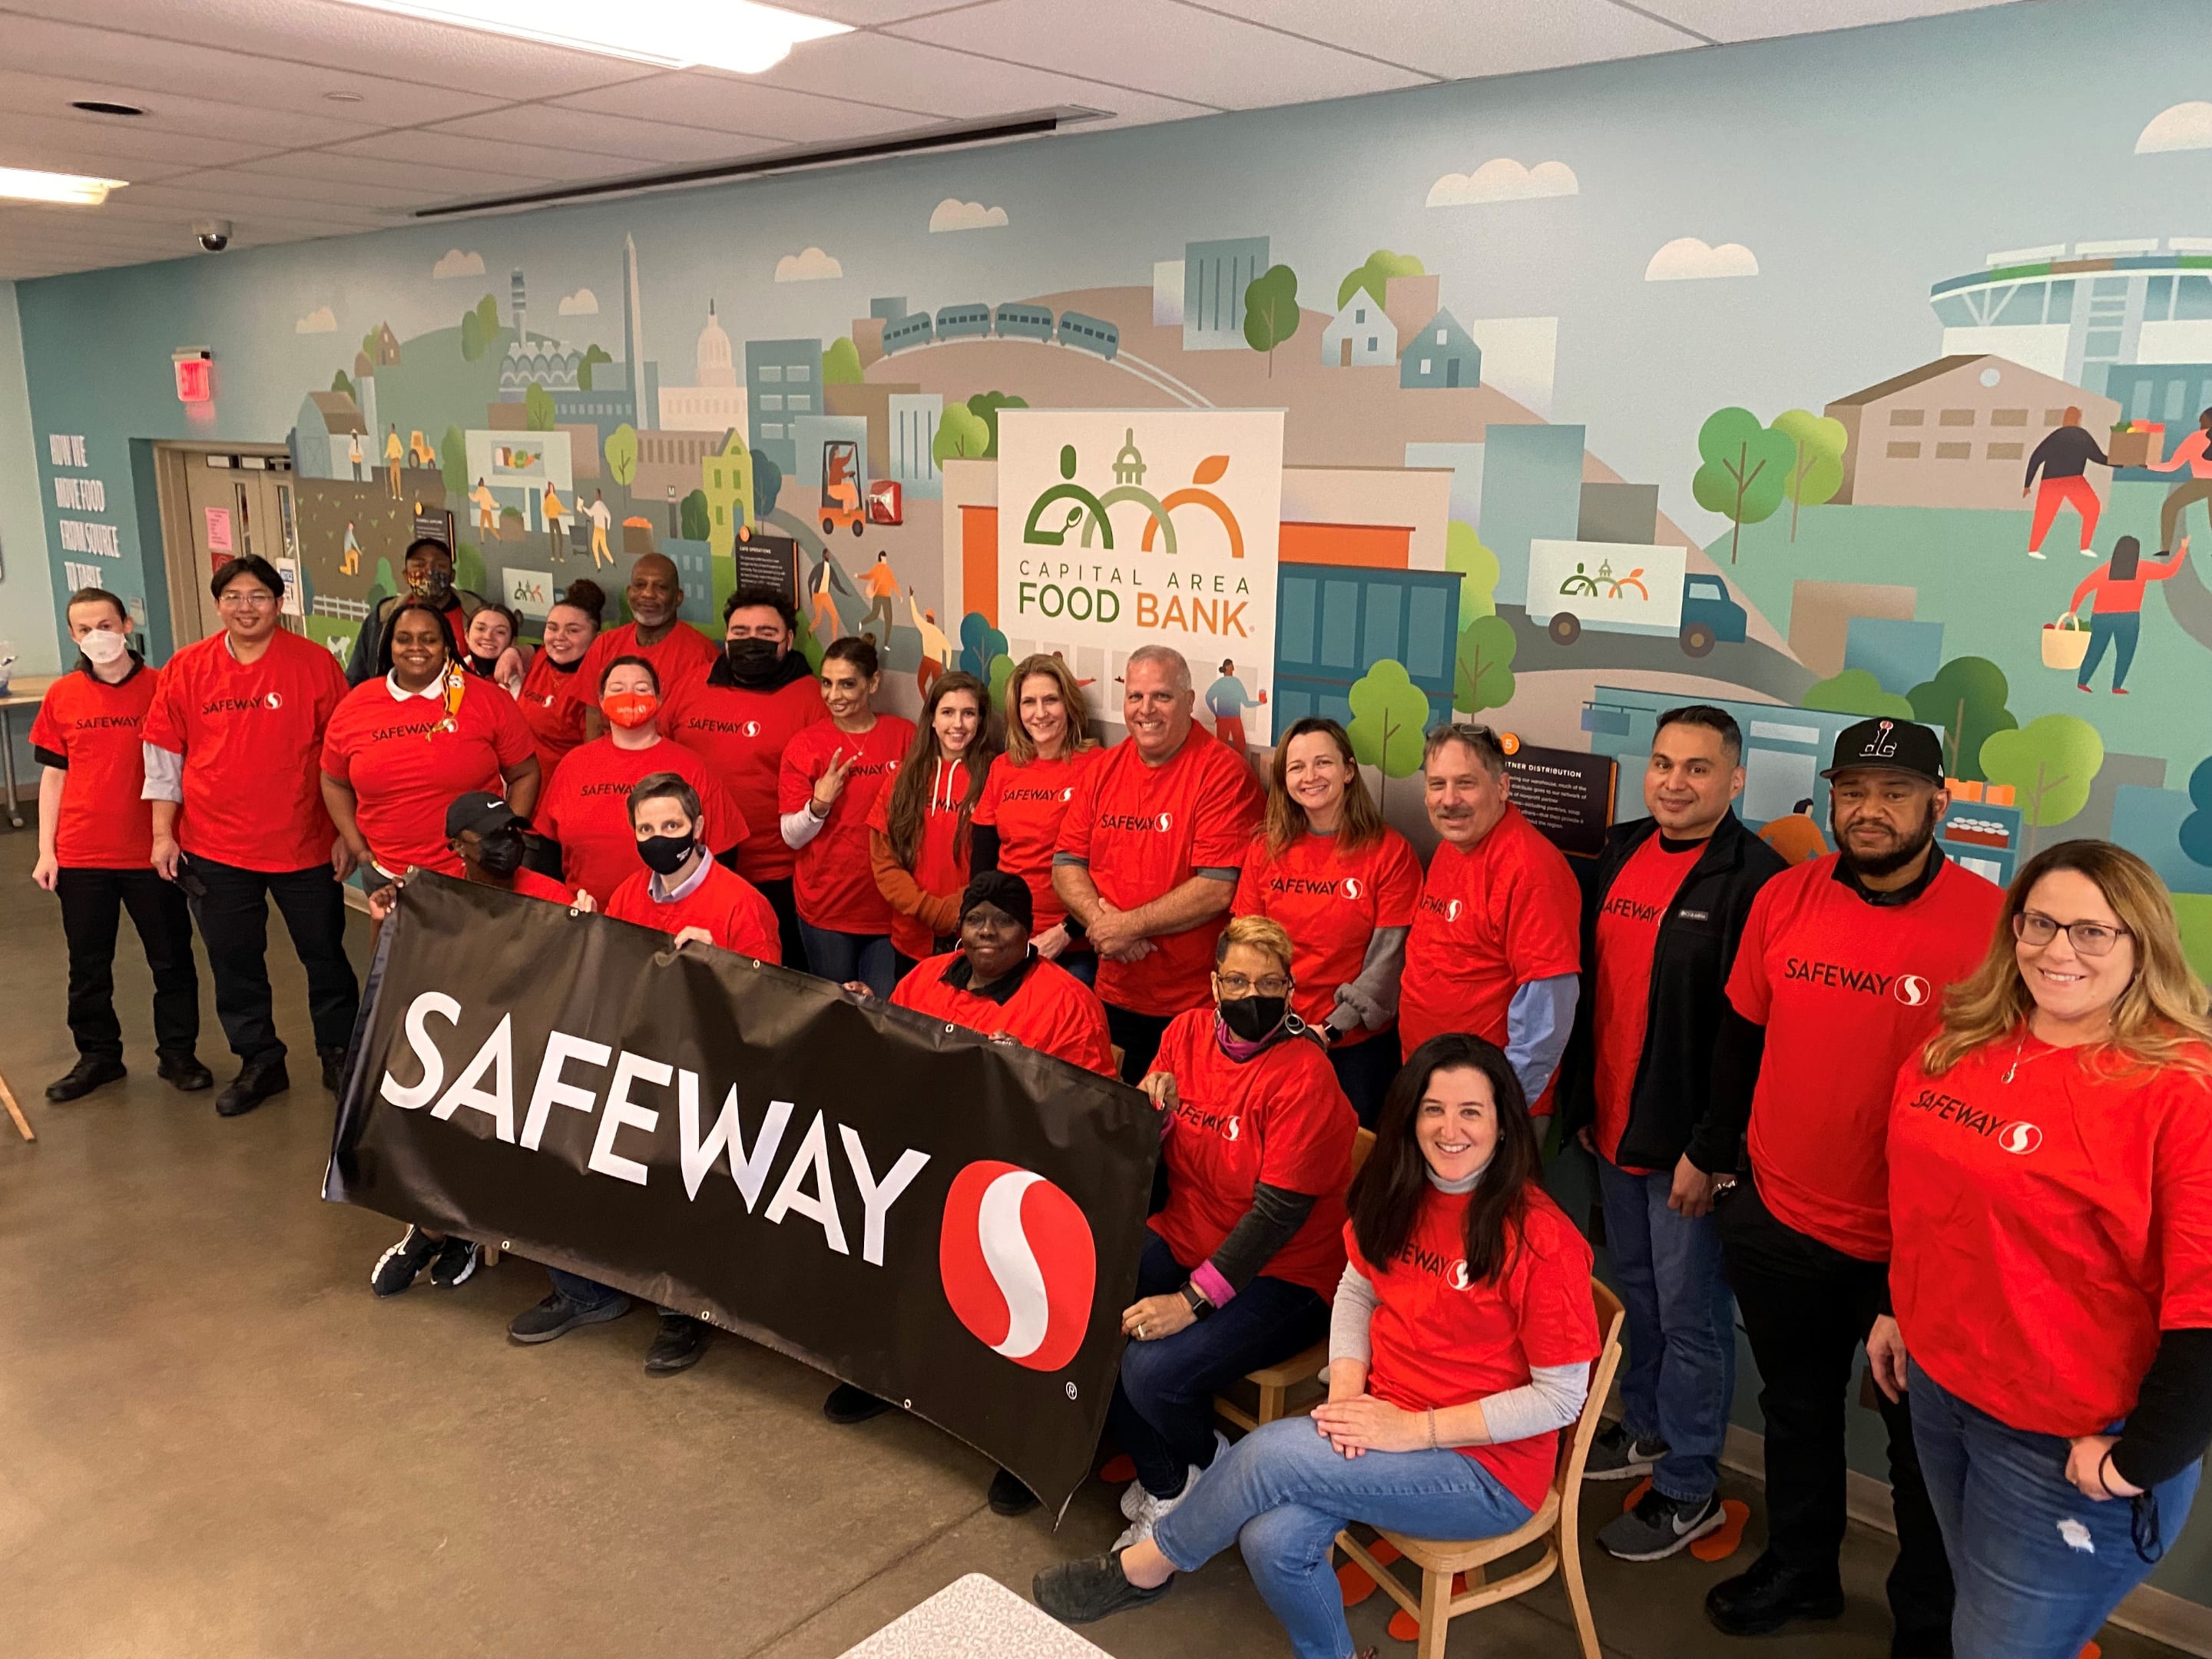 Safeway Volunteer group